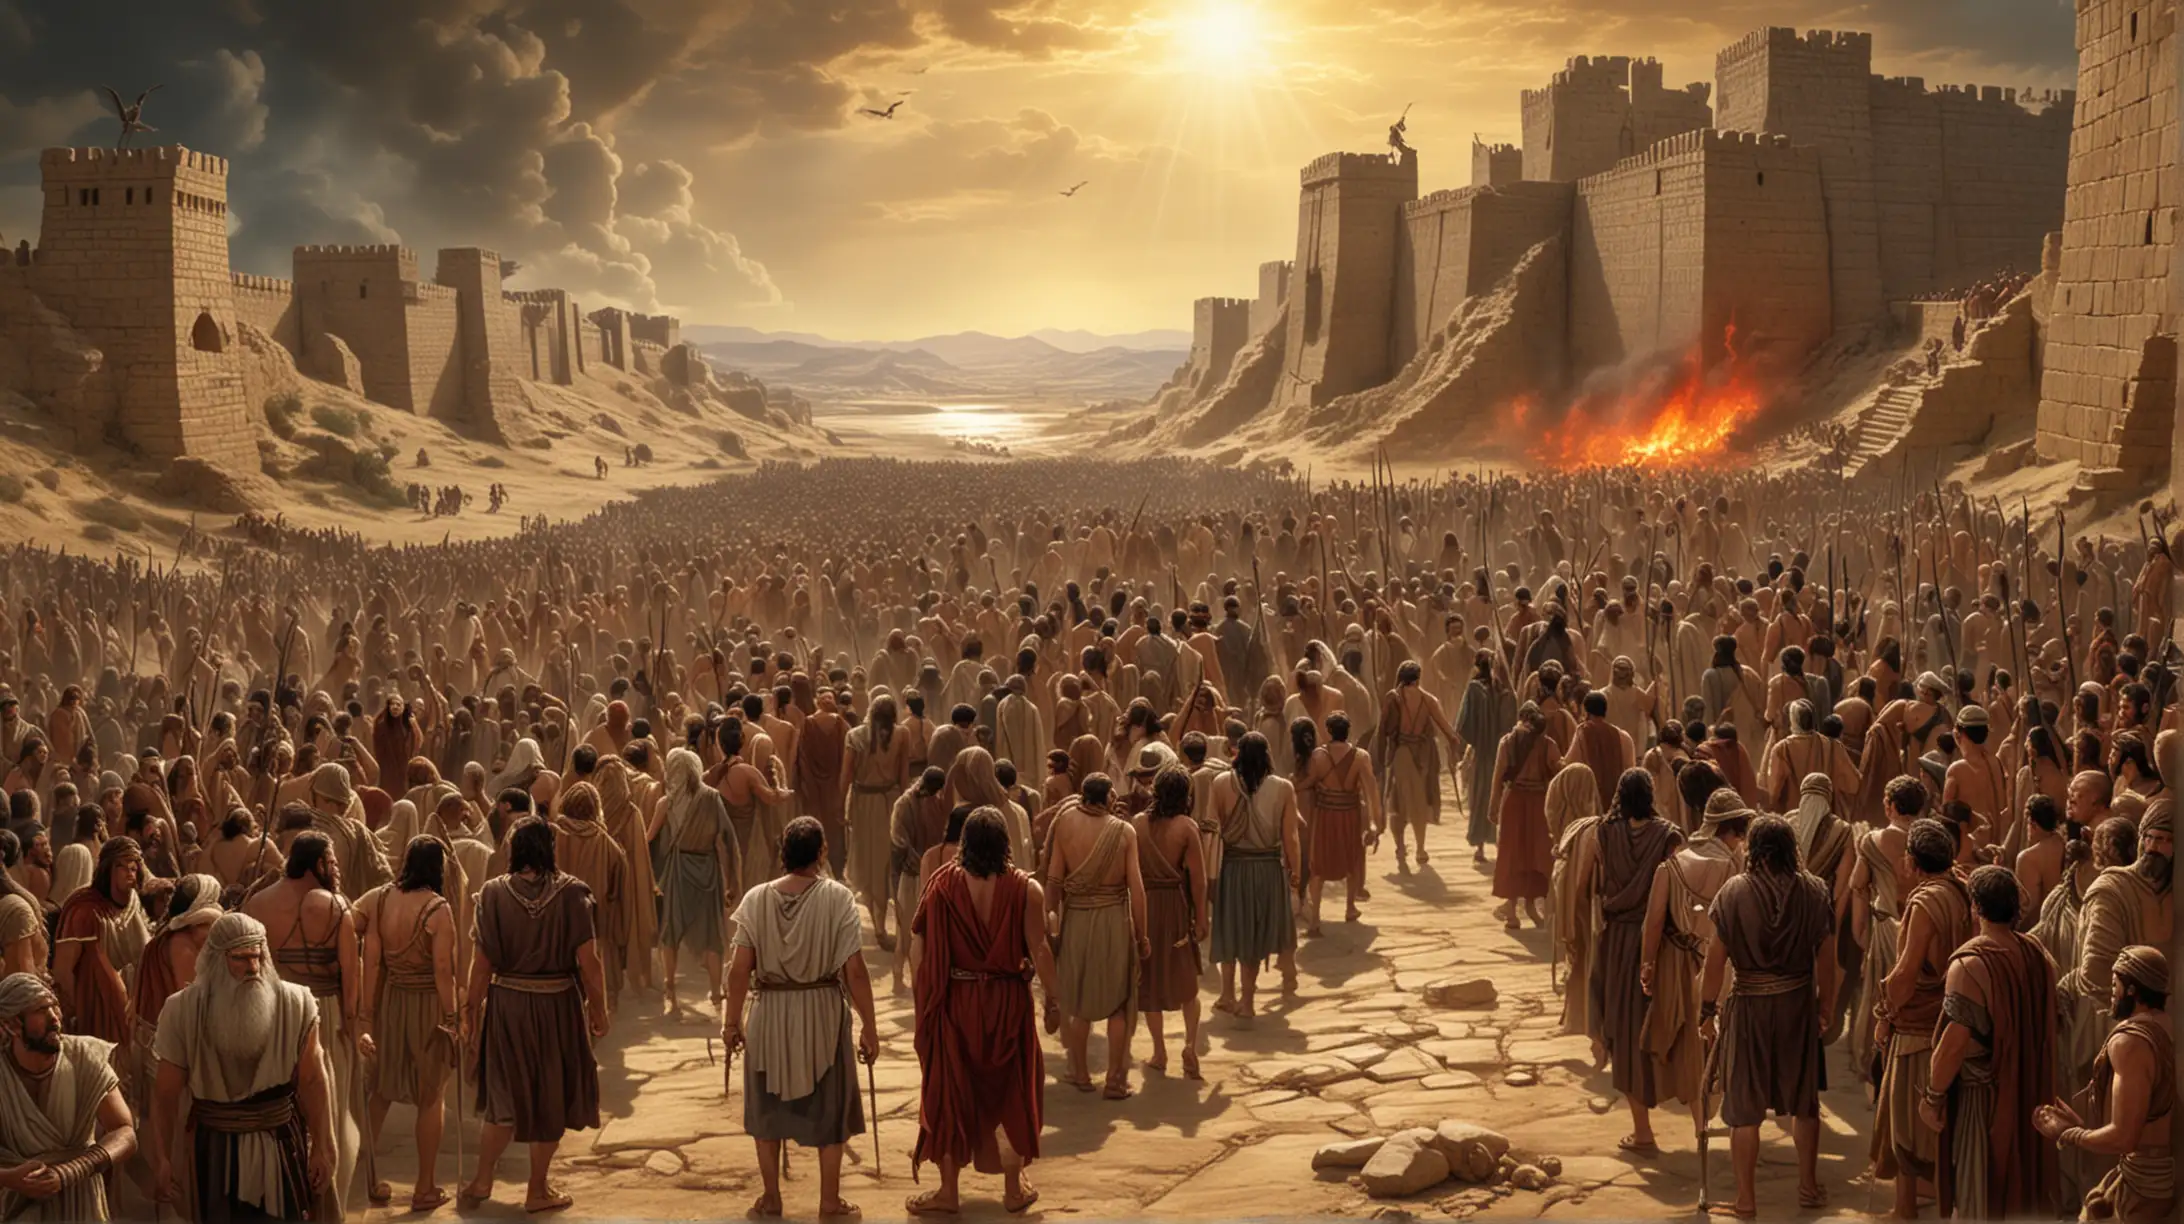 The Biblical nation of Israel being enslaved by King Nebuchadnezar, and being brought to Babylon. Set during the biblical era of Elijah.